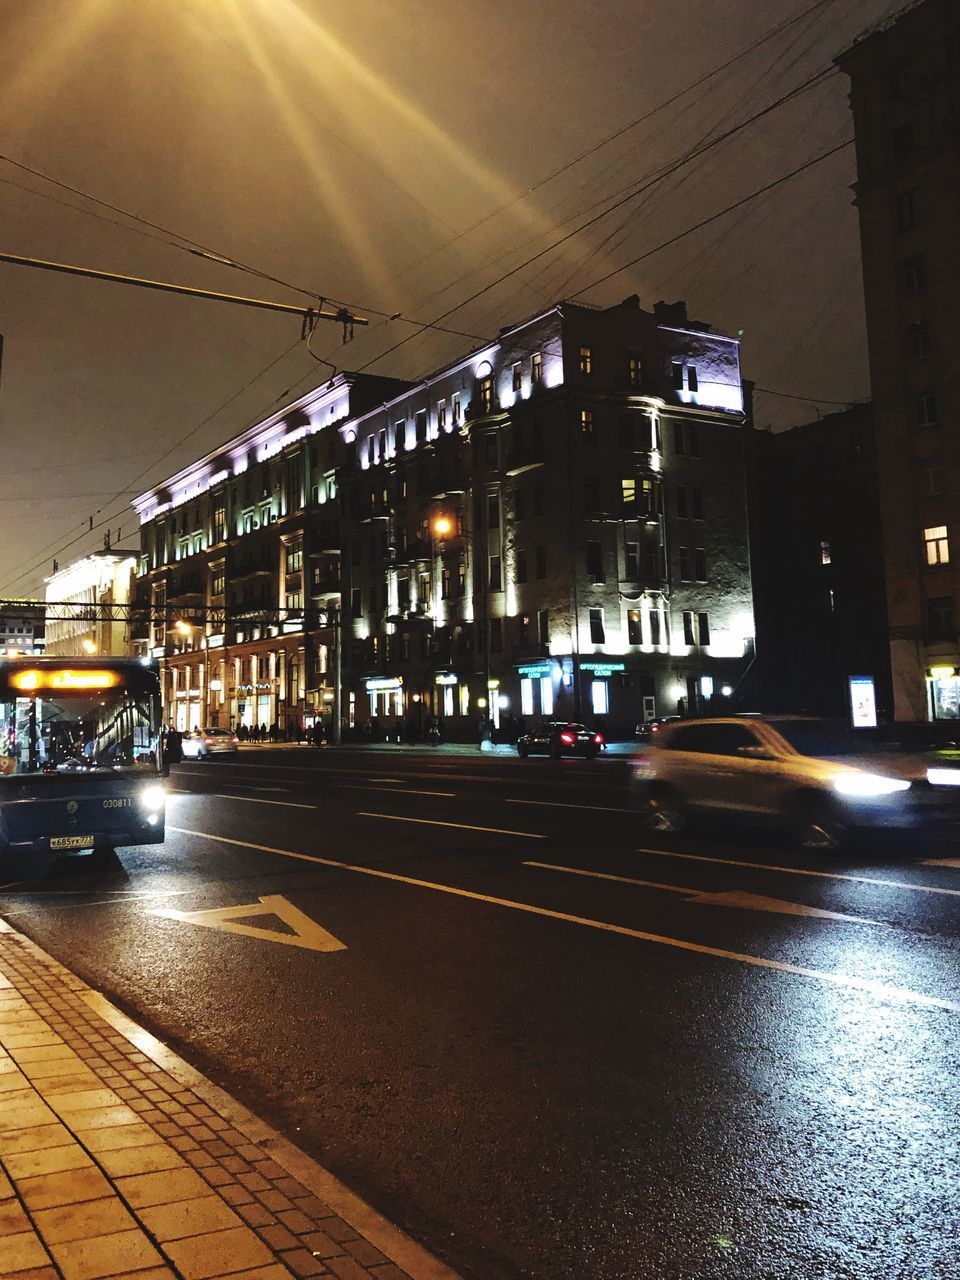 CARS ON ILLUMINATED STREET AMIDST BUILDINGS AT NIGHT